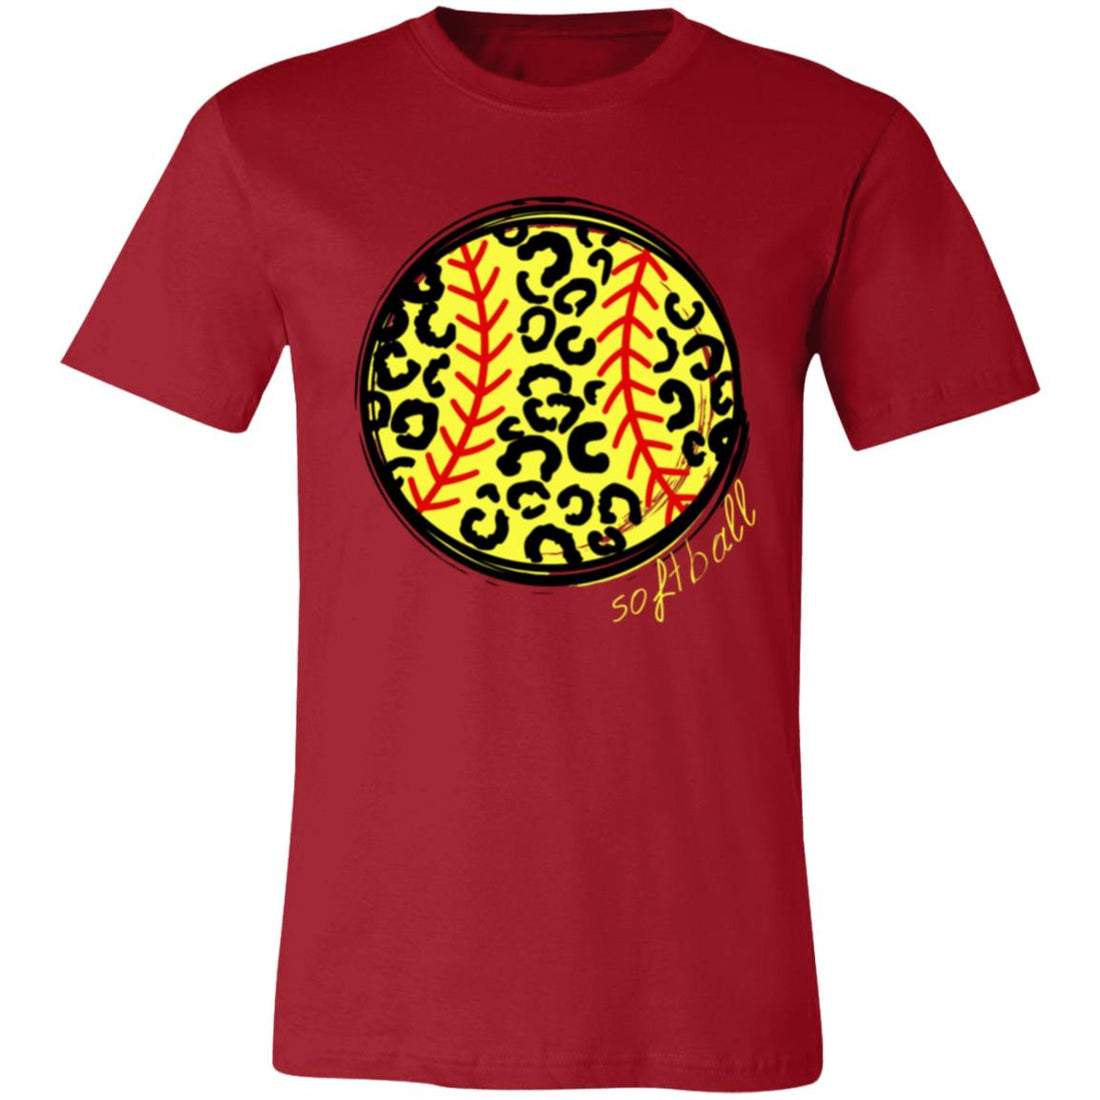 Softball Cheetah Short-Sleeve T-Shirt - T-Shirts - Positively Sassy - Softball Cheetah Short-Sleeve T-Shirt